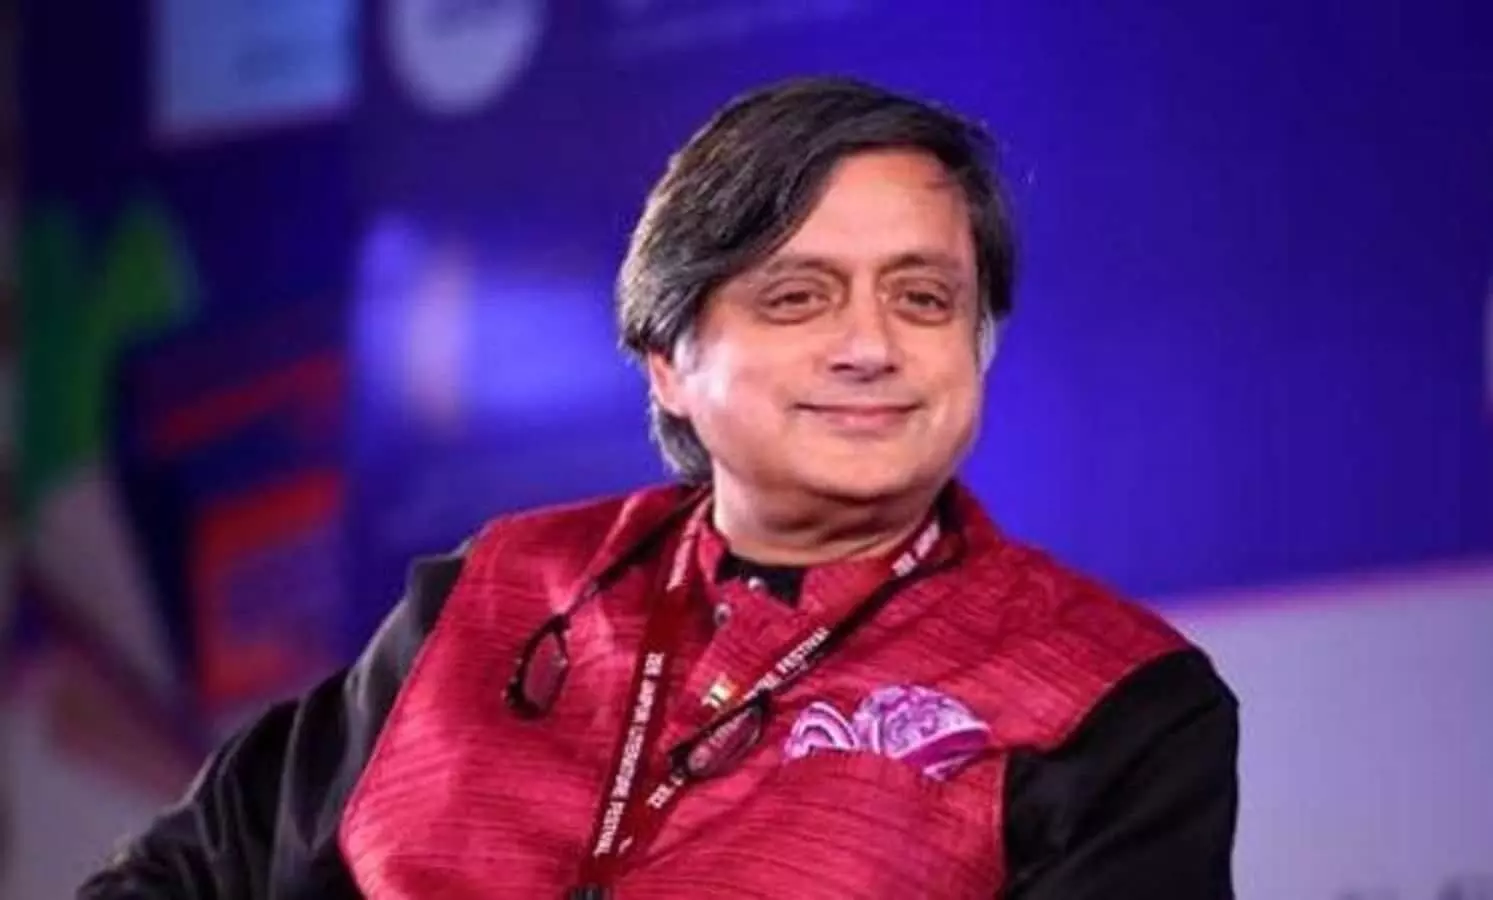 Rahul Gandhi said I must run for Congress president, says Shashi Tharoor